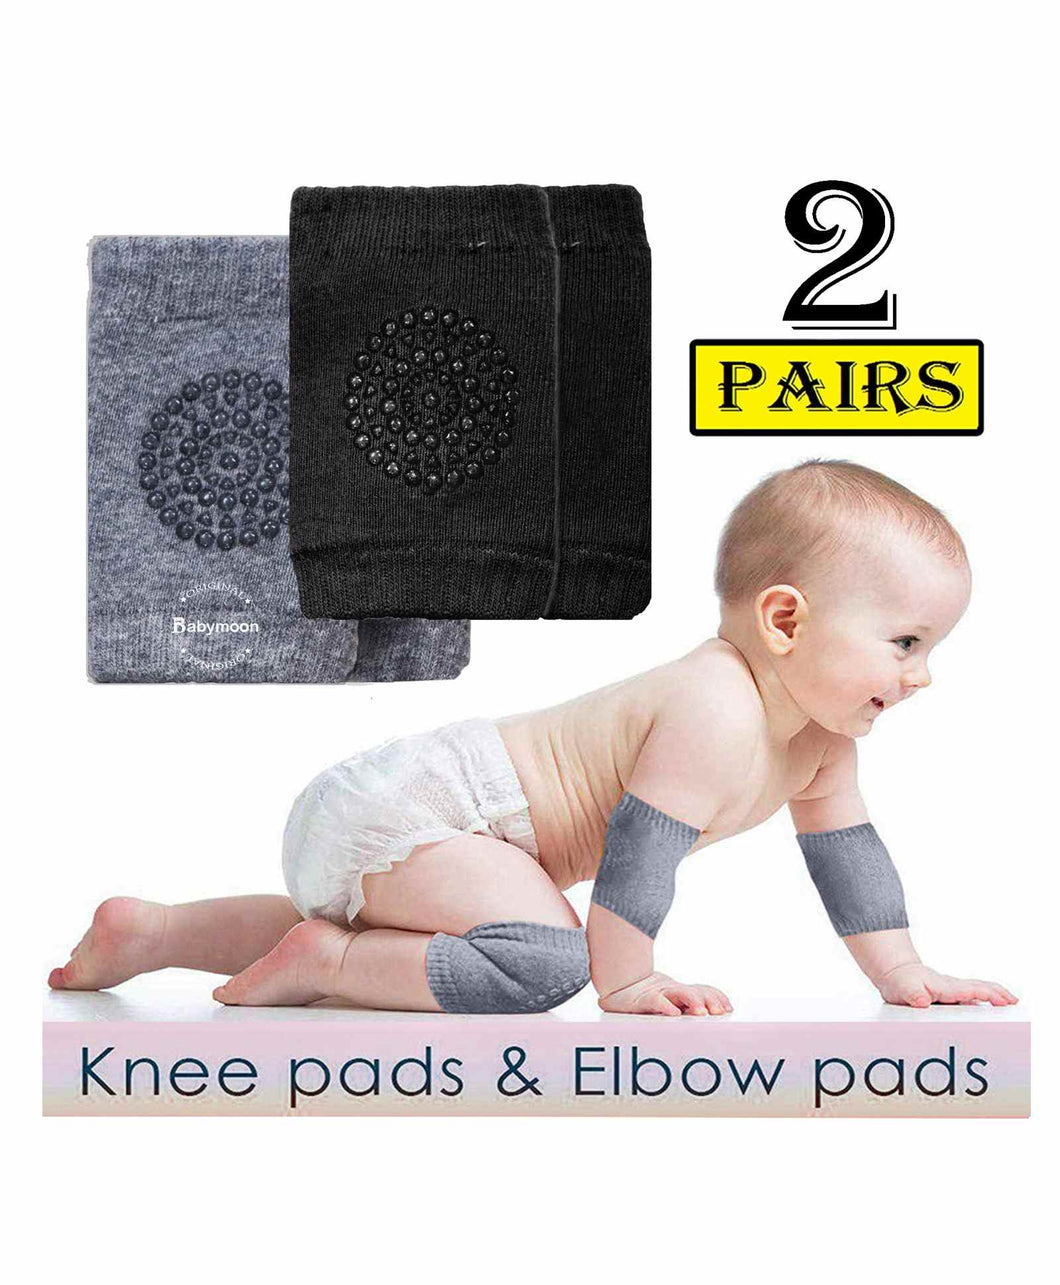 Babymoon Baby Kids Knee Pads AntiSlip Stretchable Knee Cap Elbow Safety - Light Grey & Black